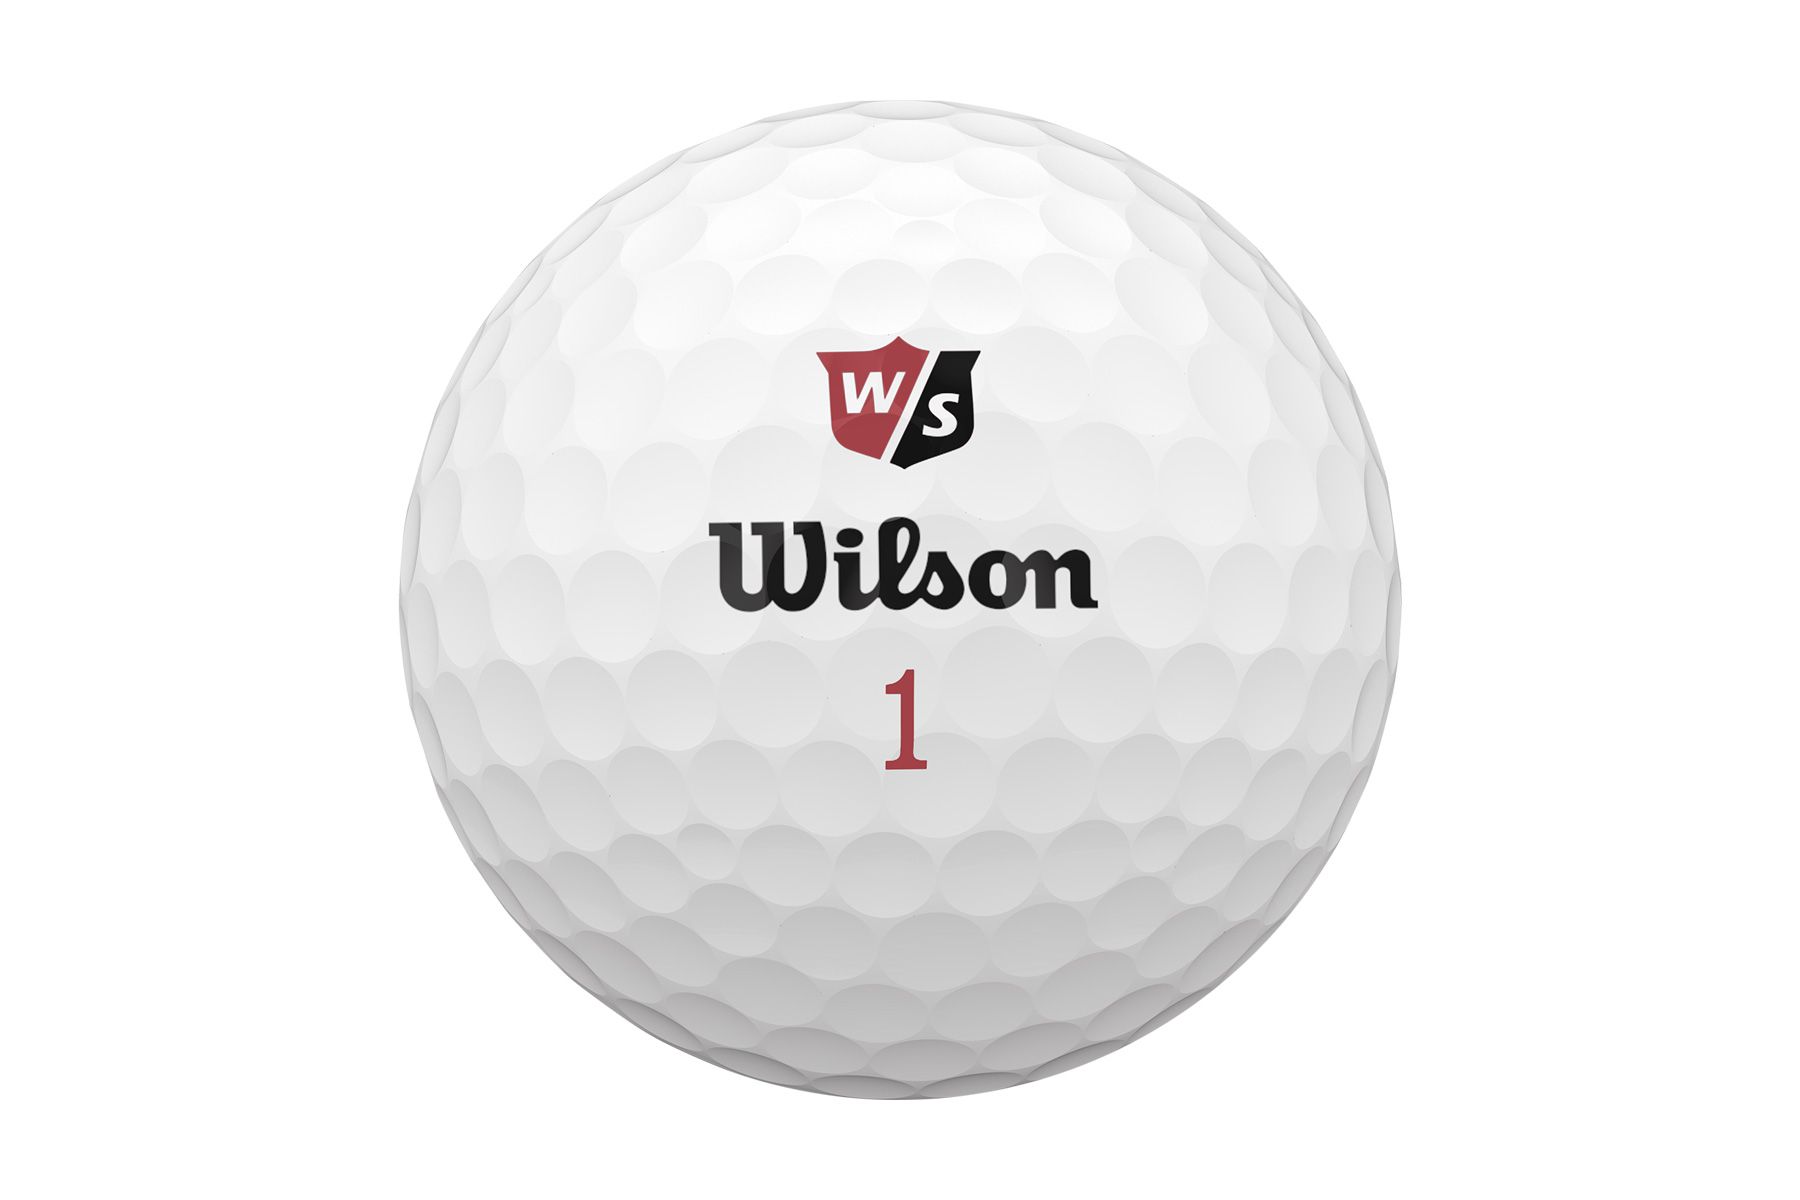 W/S Premium Cosmetic Blemish Golfbälle